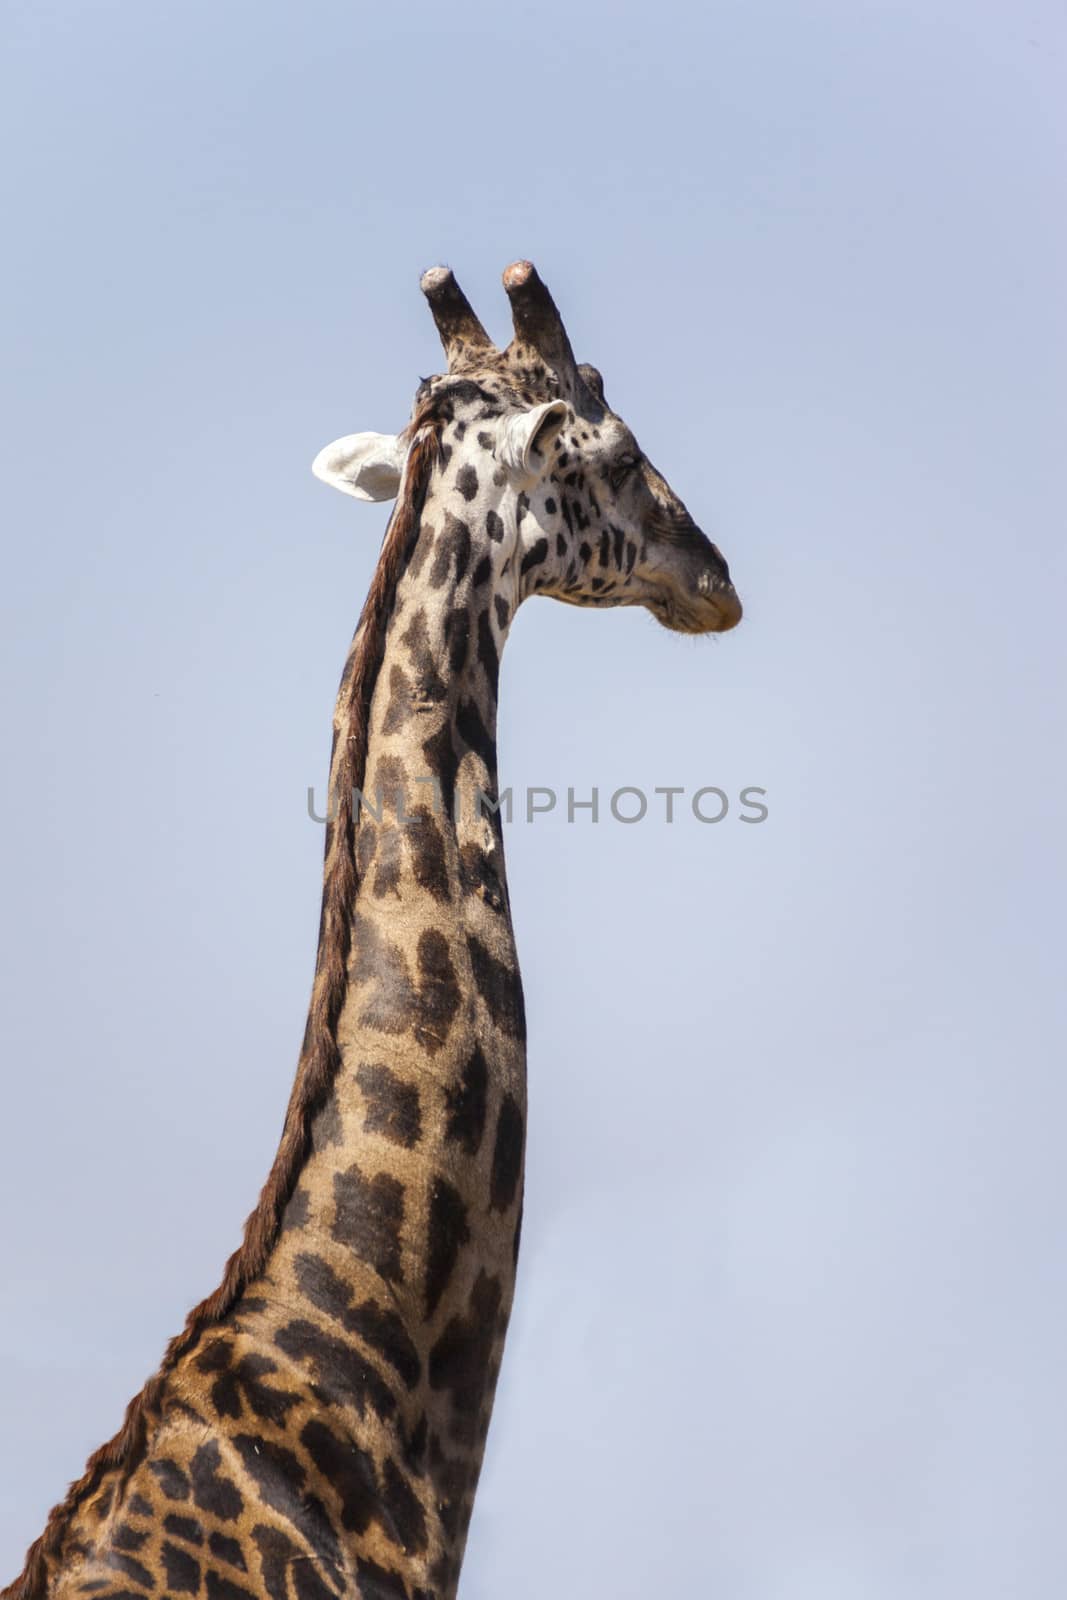 Side view of a giraffe against blue sky